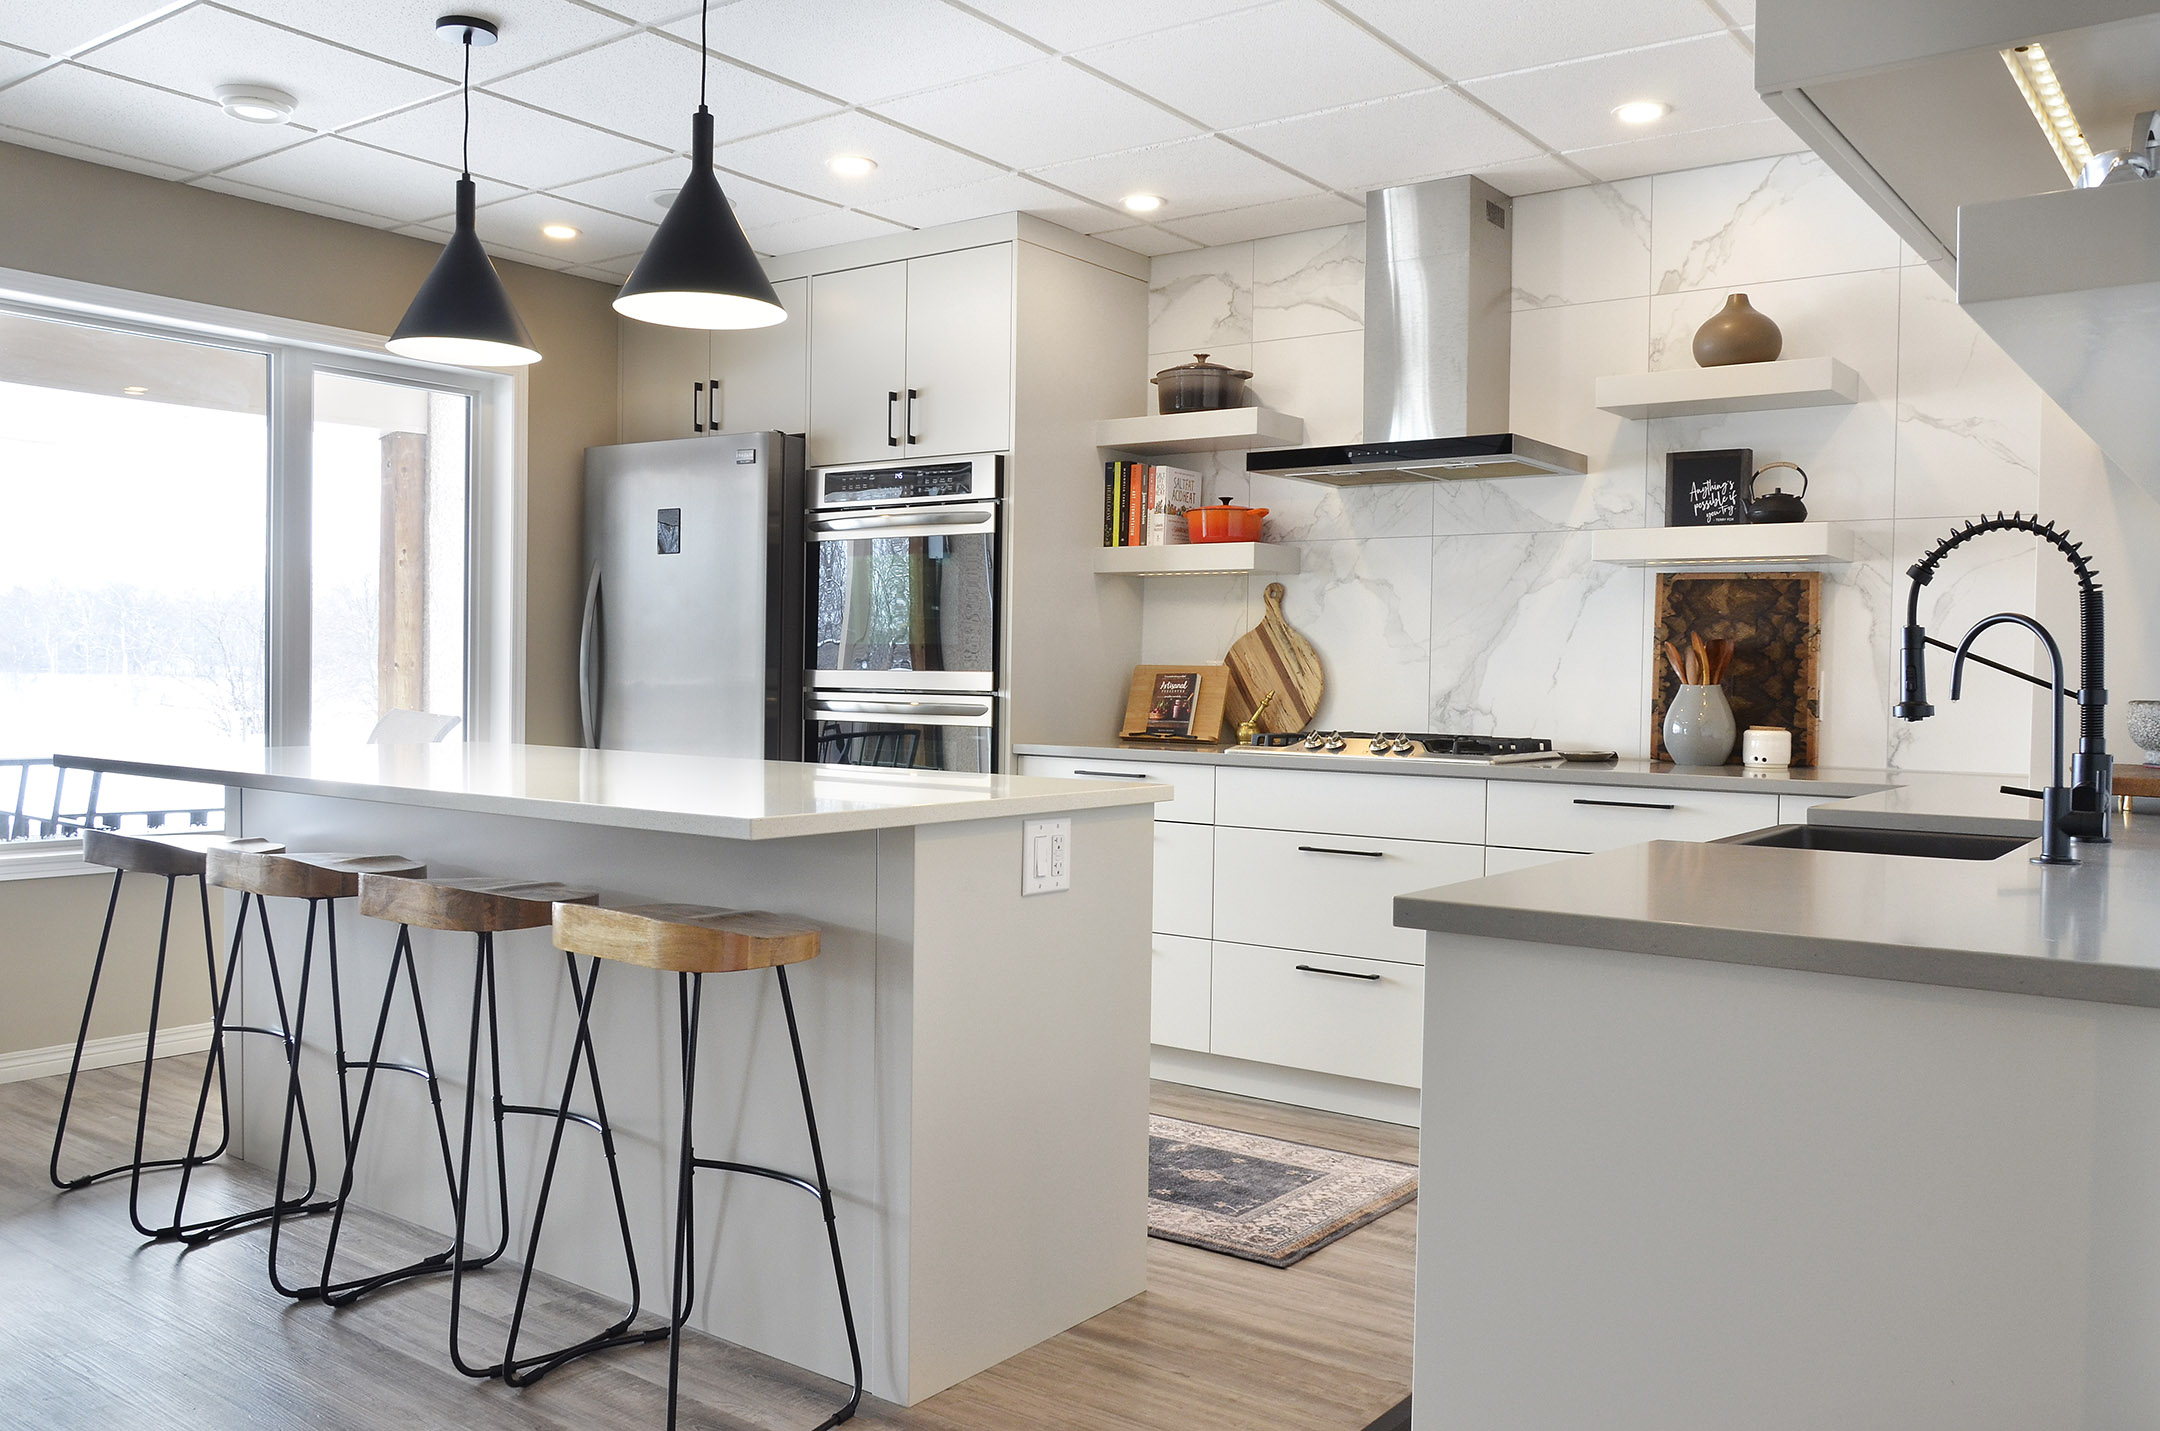 Rivers Edge kitchen renovation Winnipeg island marble modern industrial finishes black faucet